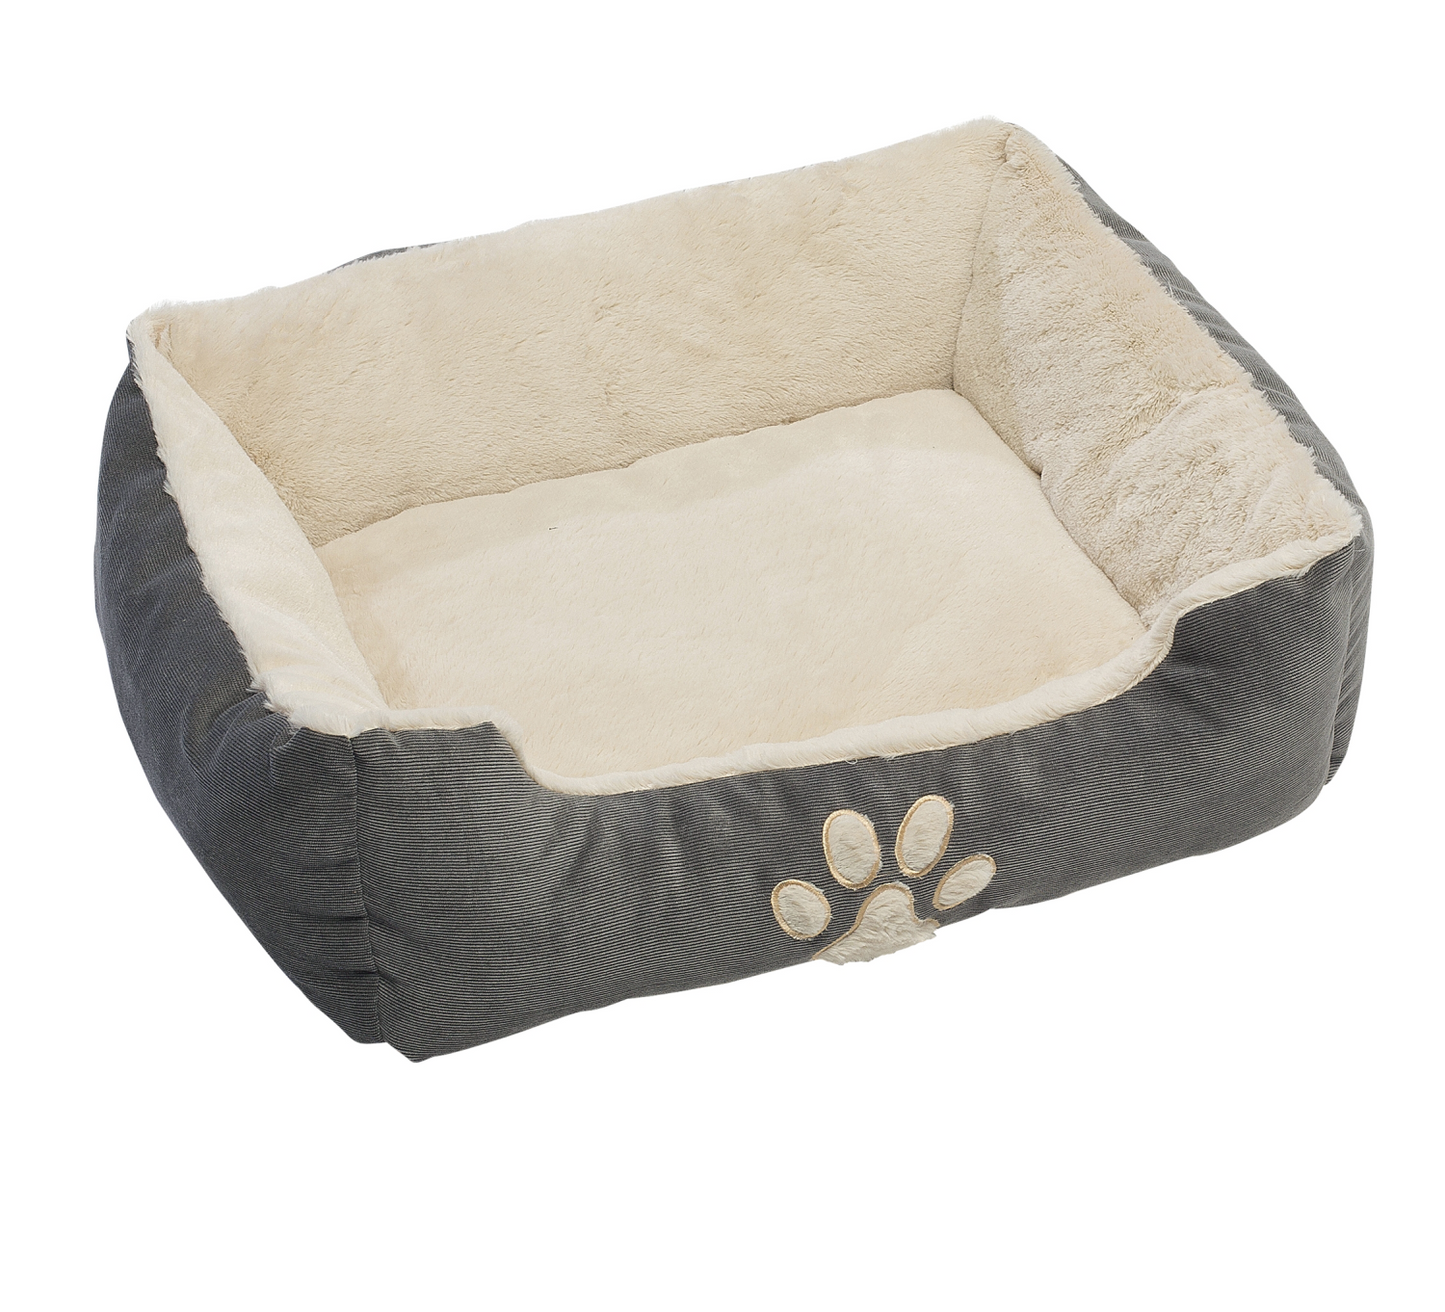 Pet Comfort Animal Cushion Pet Bed 60x48x18cm